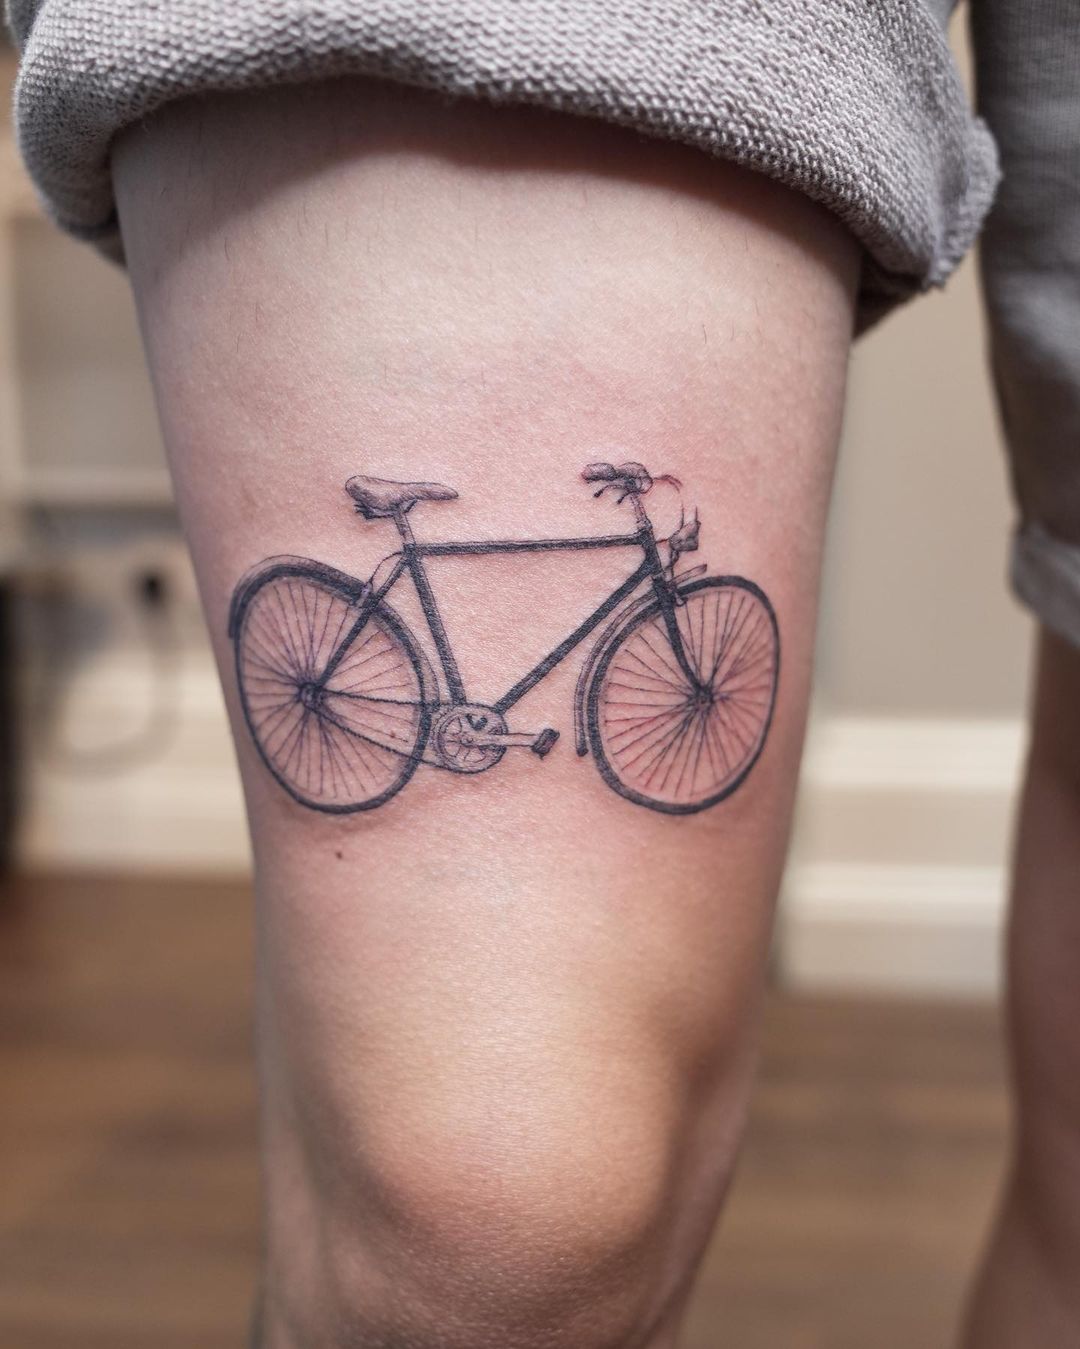 Happy Bicycle Day   bicycleday alberthoffman acid 419 tattoo   Instagram